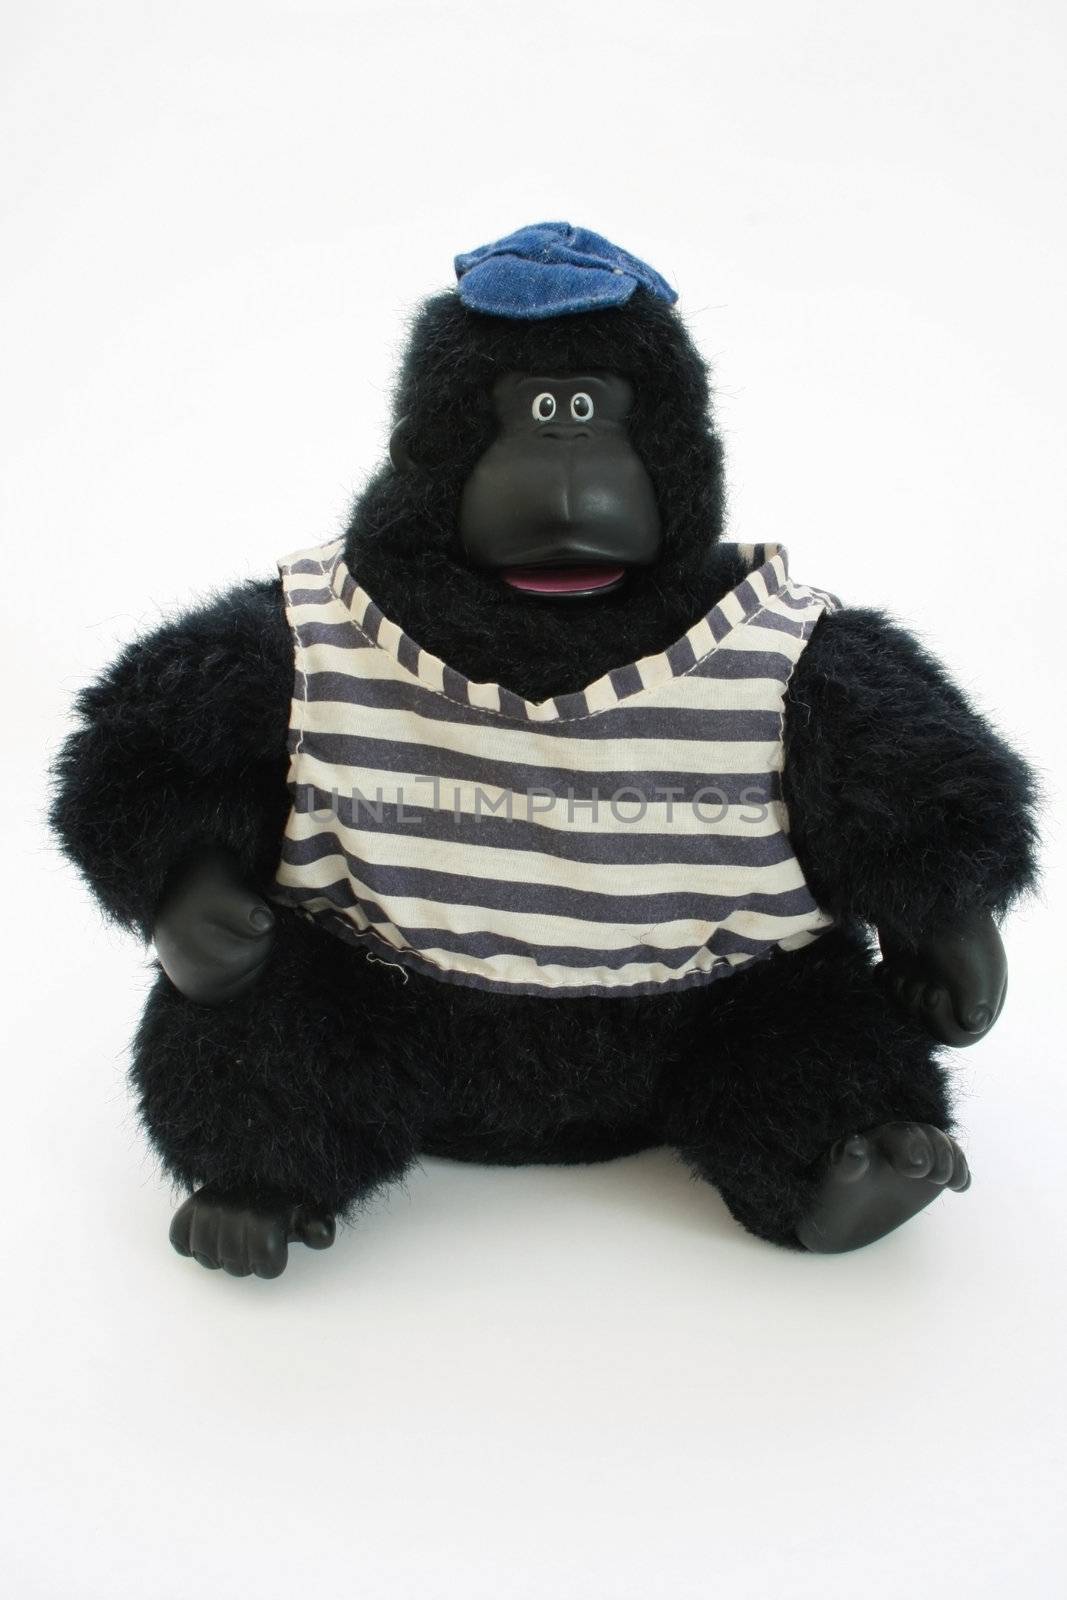 gorilla toy by jonasbsl